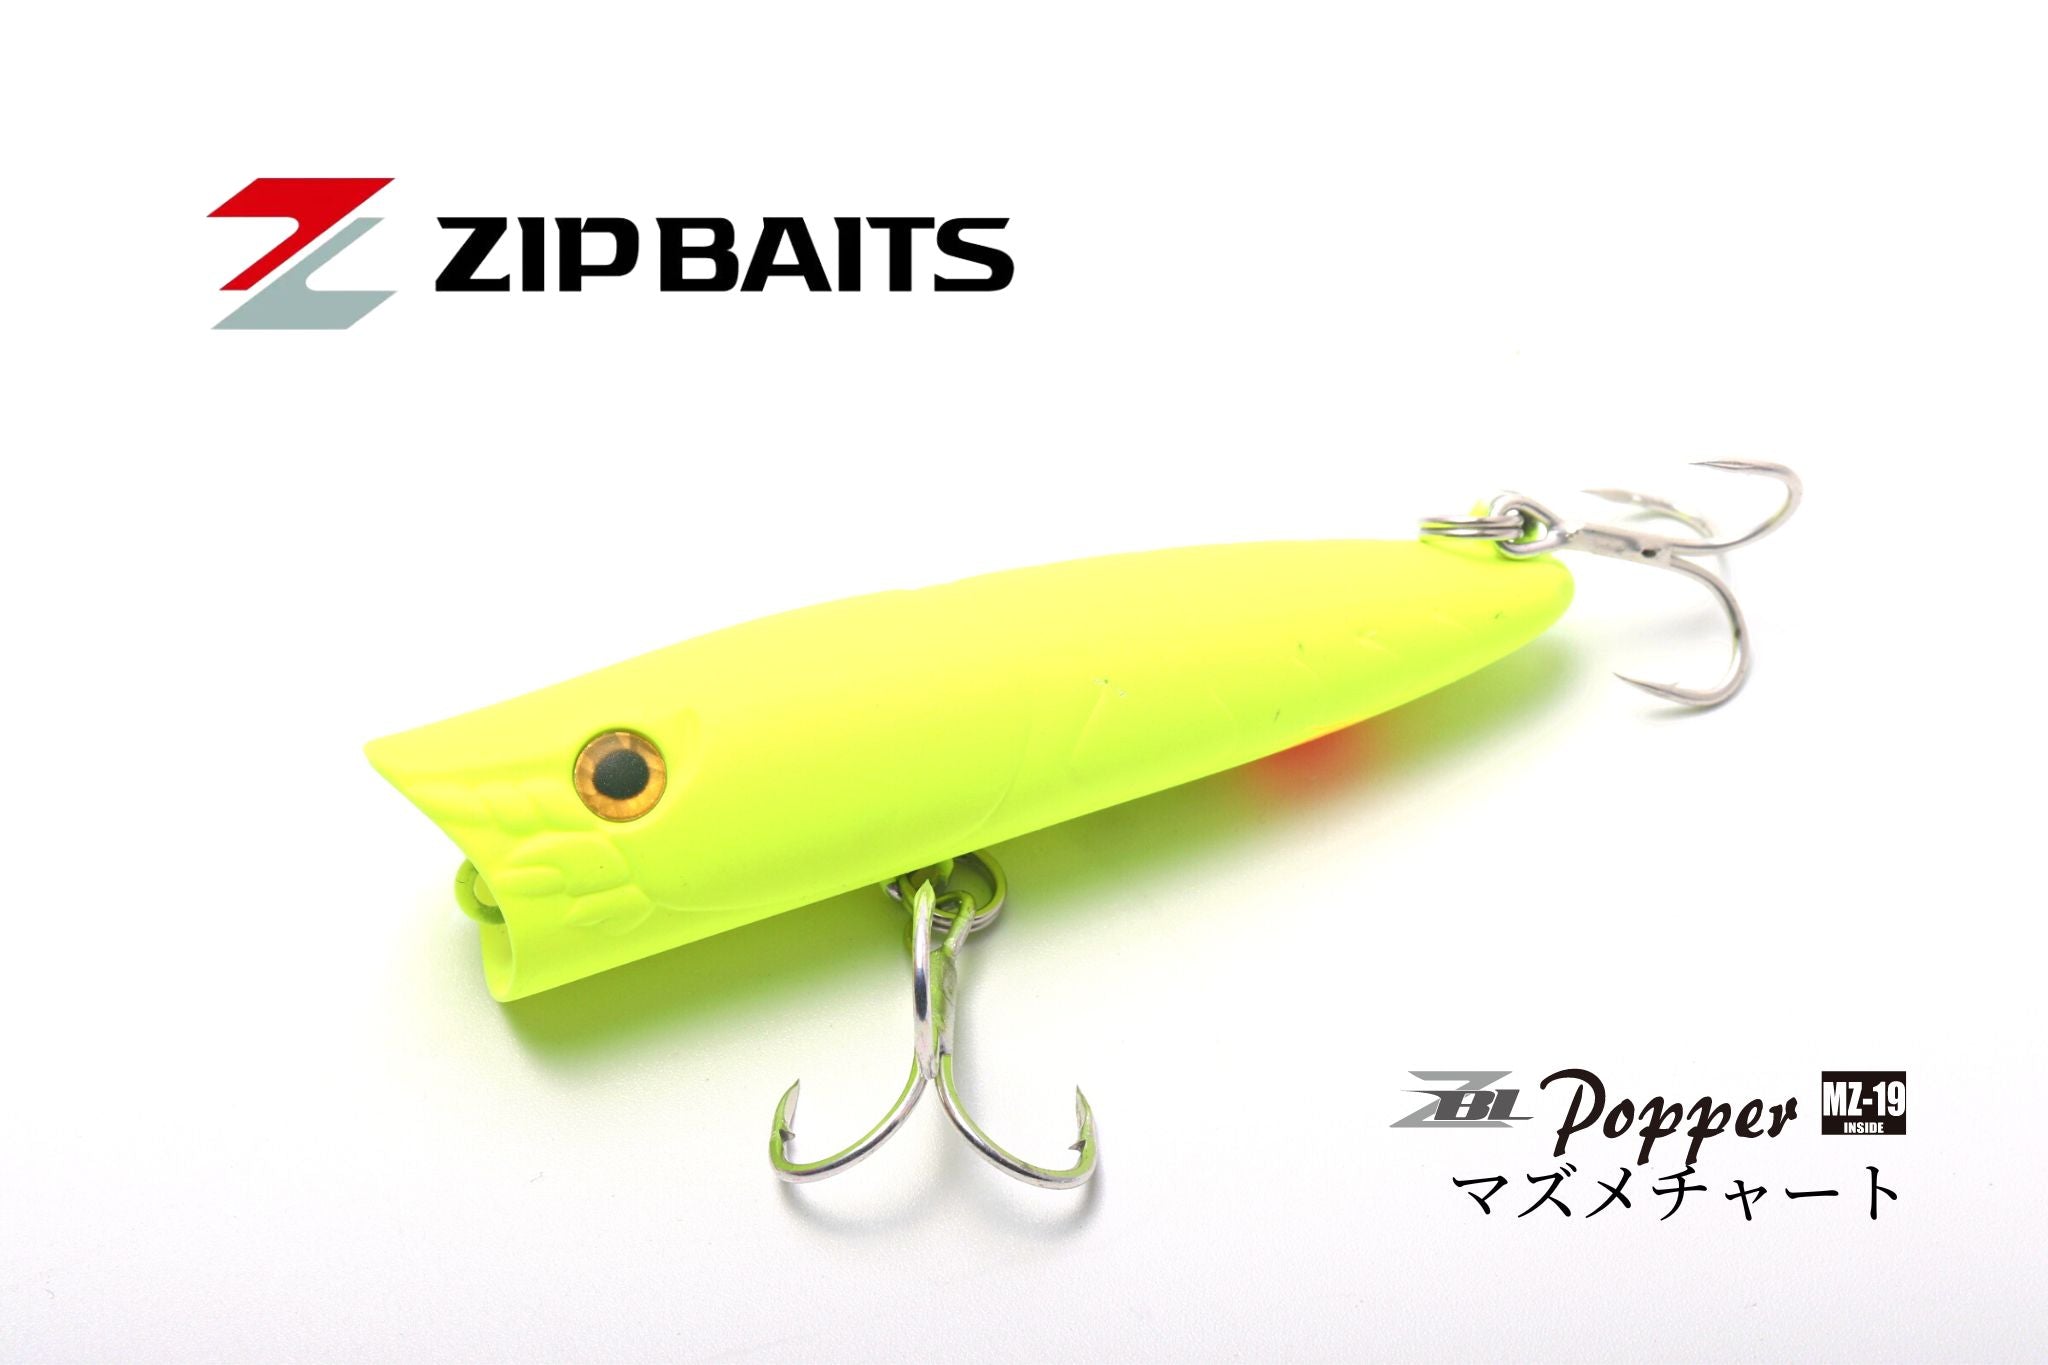 ZBL Popper/ザブラポッパー | 宮崎市の釣具店 FISHING BASE PLAISANCE